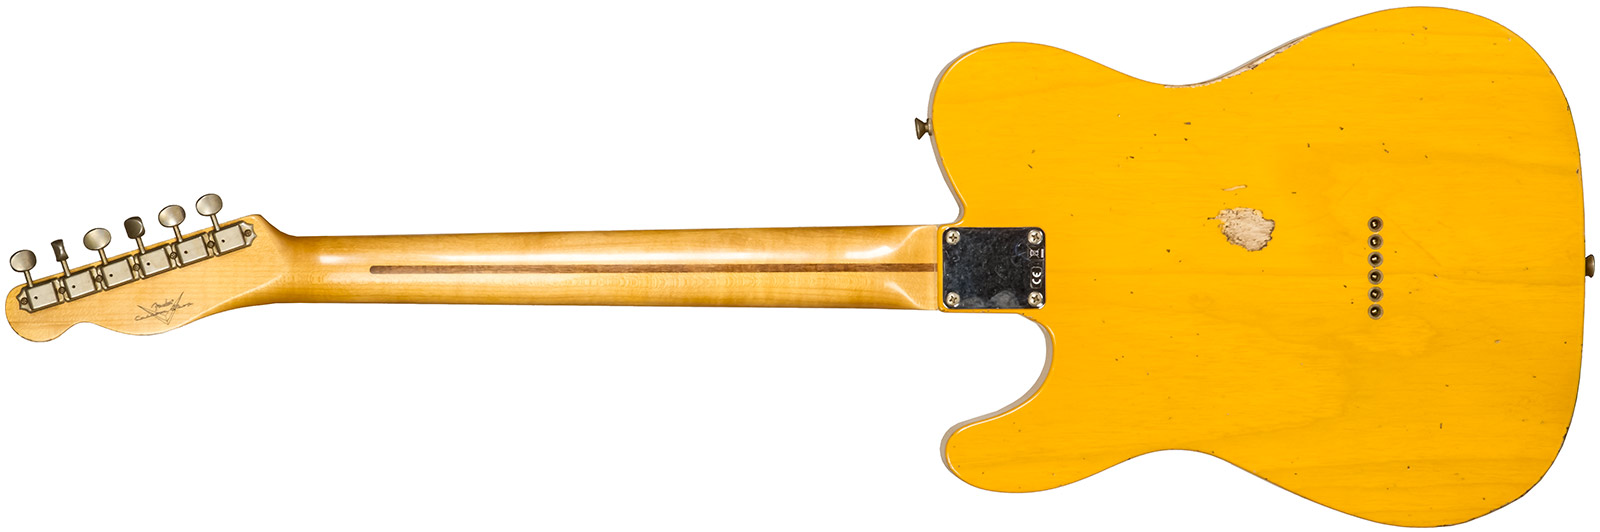 Fender Custom Shop Tele 1952 2s Ht Mn #r135090 - Relic Aged Butterscotch Blonde - E-Gitarre in Teleform - Variation 1